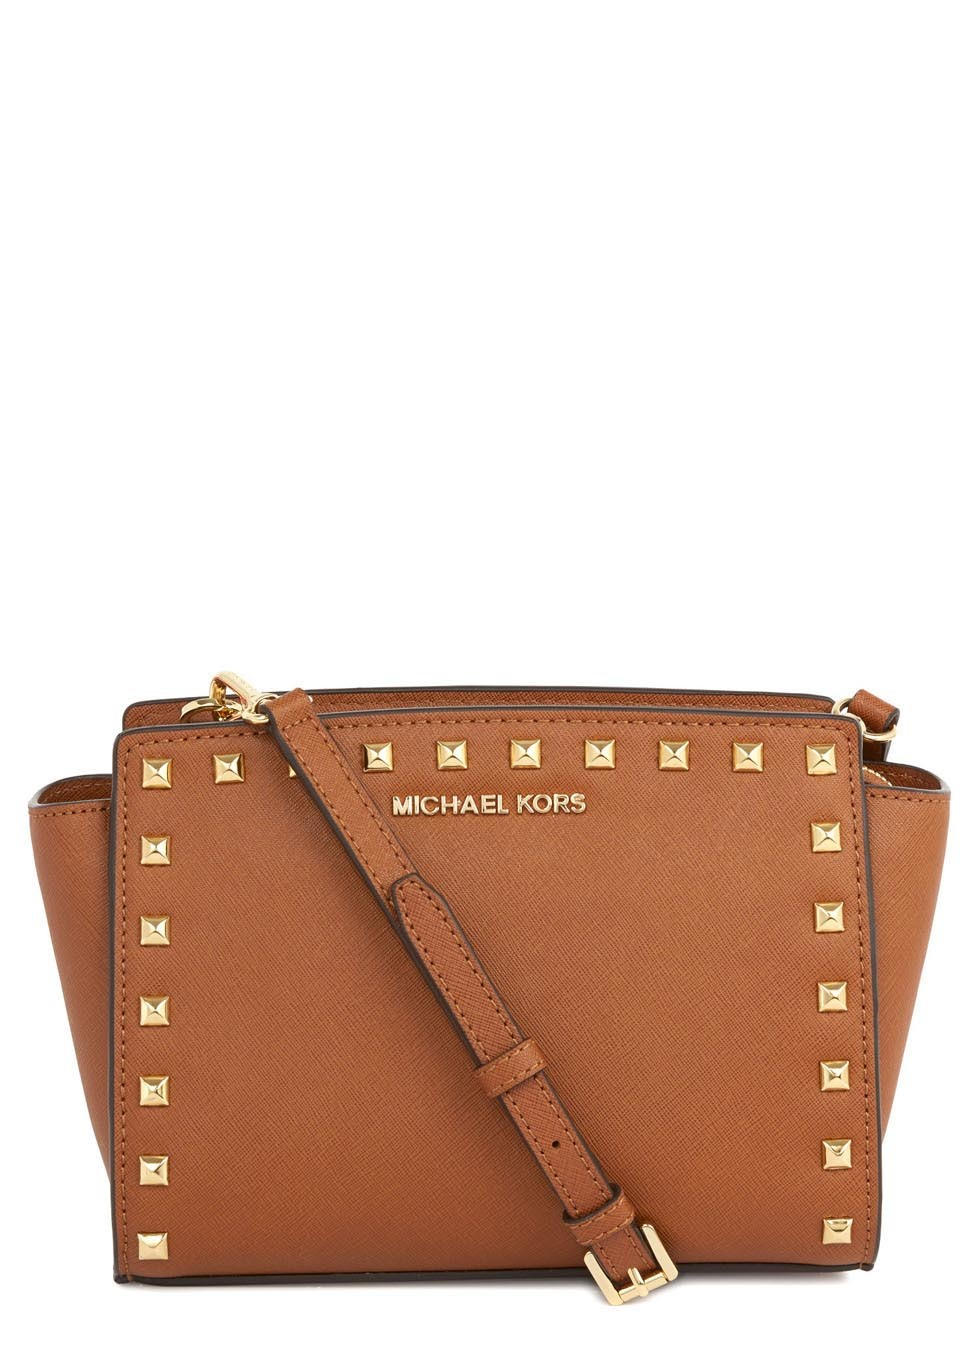 Michael Kors Selma Studded Tan Leather Crossbody Bag in Brown (Tan) | Lyst